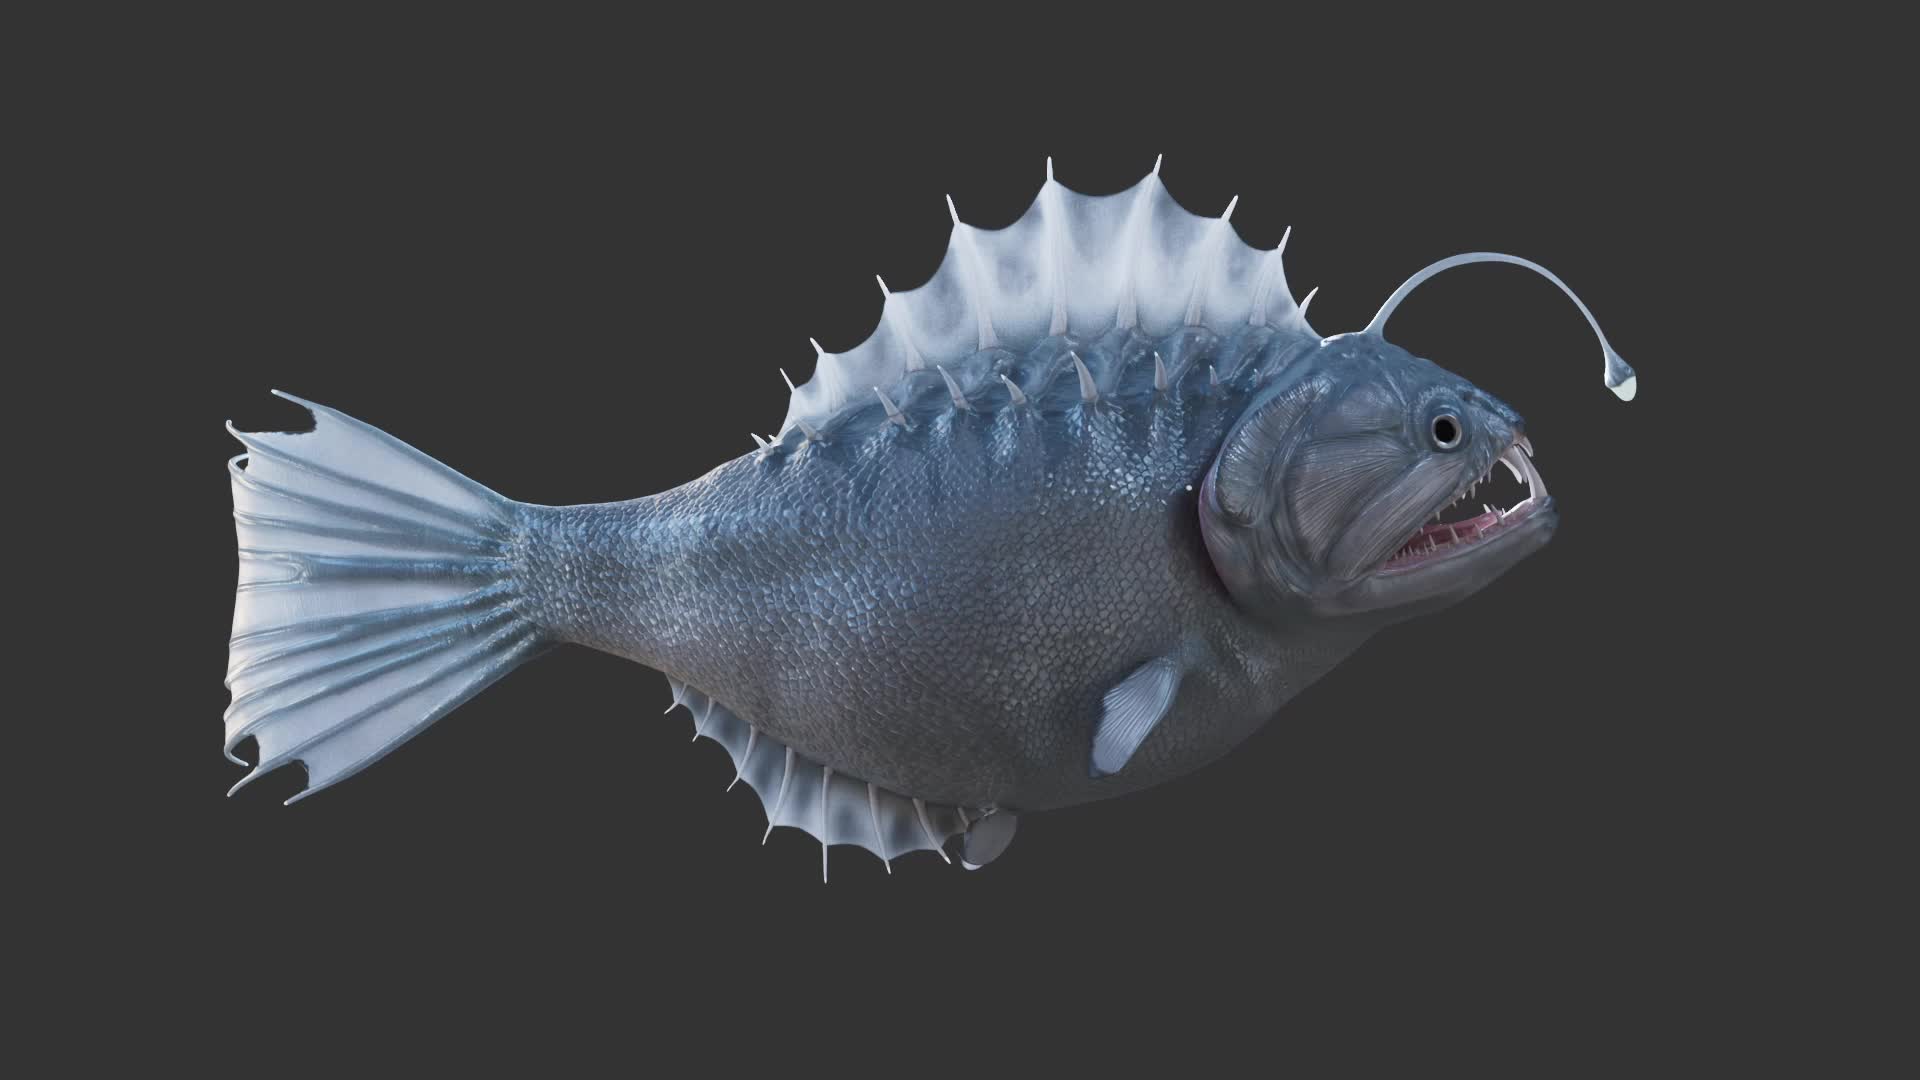 ArtStation - Deepsea fish